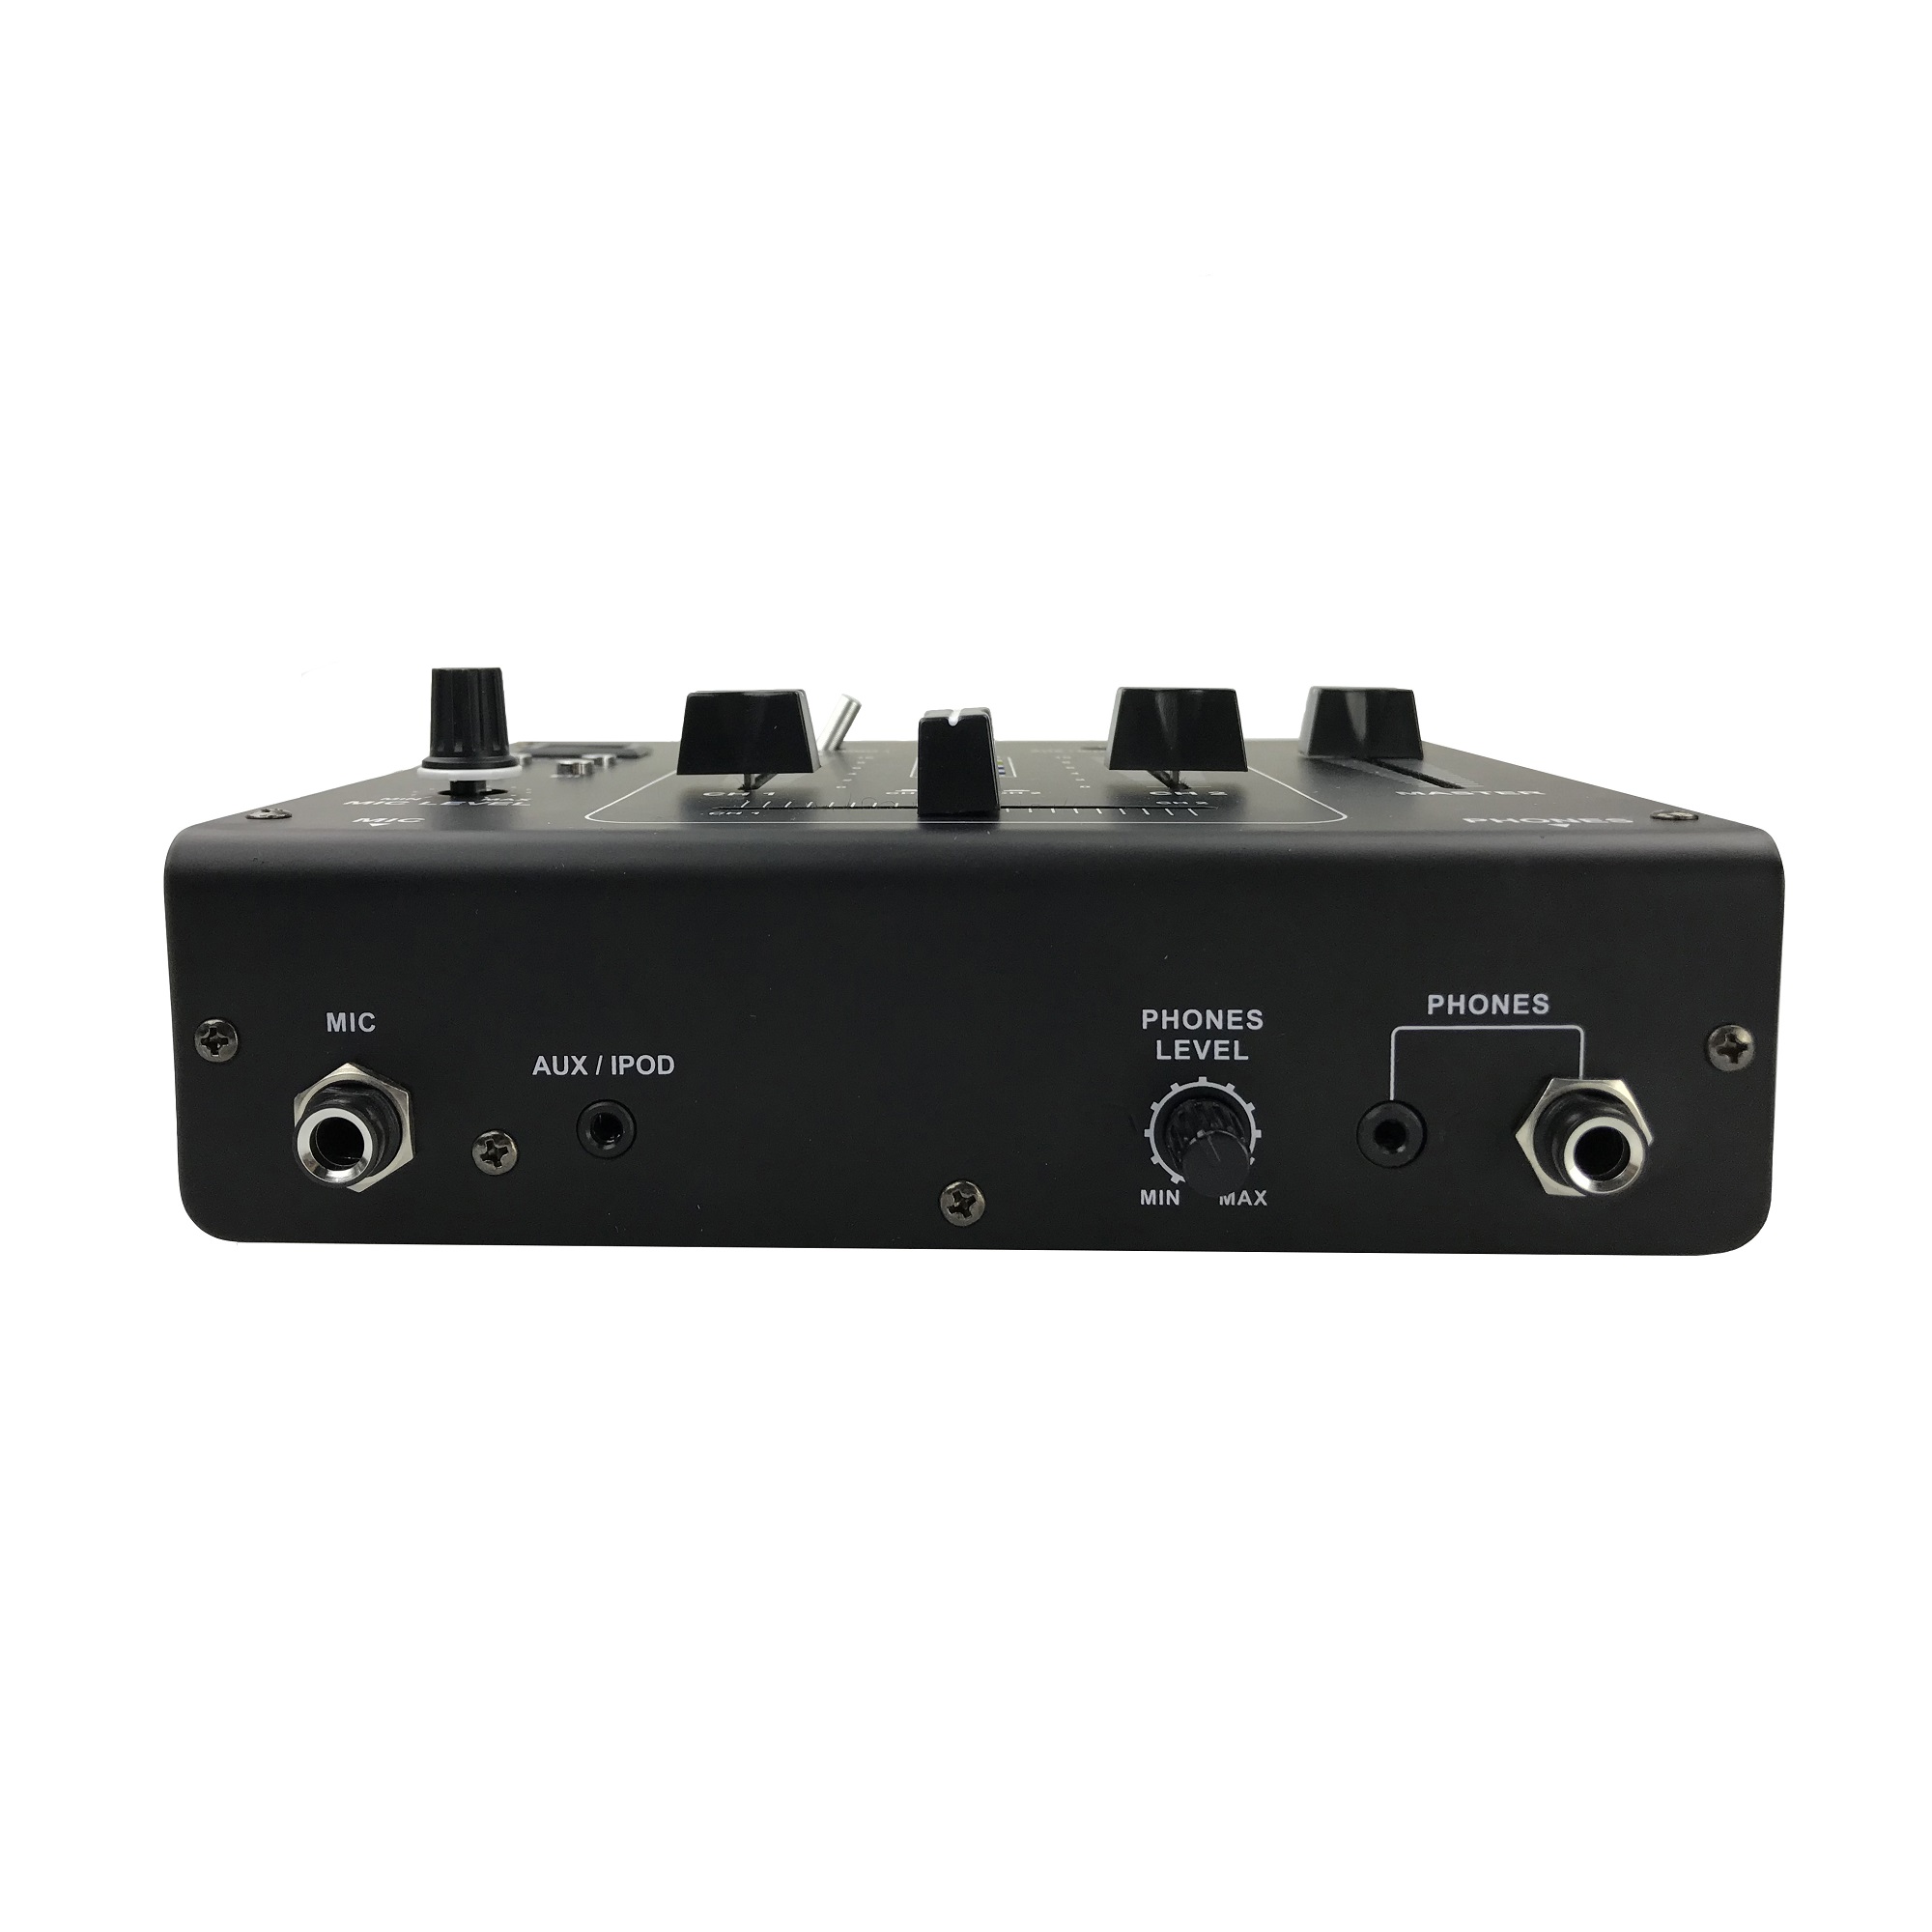 DJM62-BT 2 channels 6 inputs DJ mixer with 1 USB player